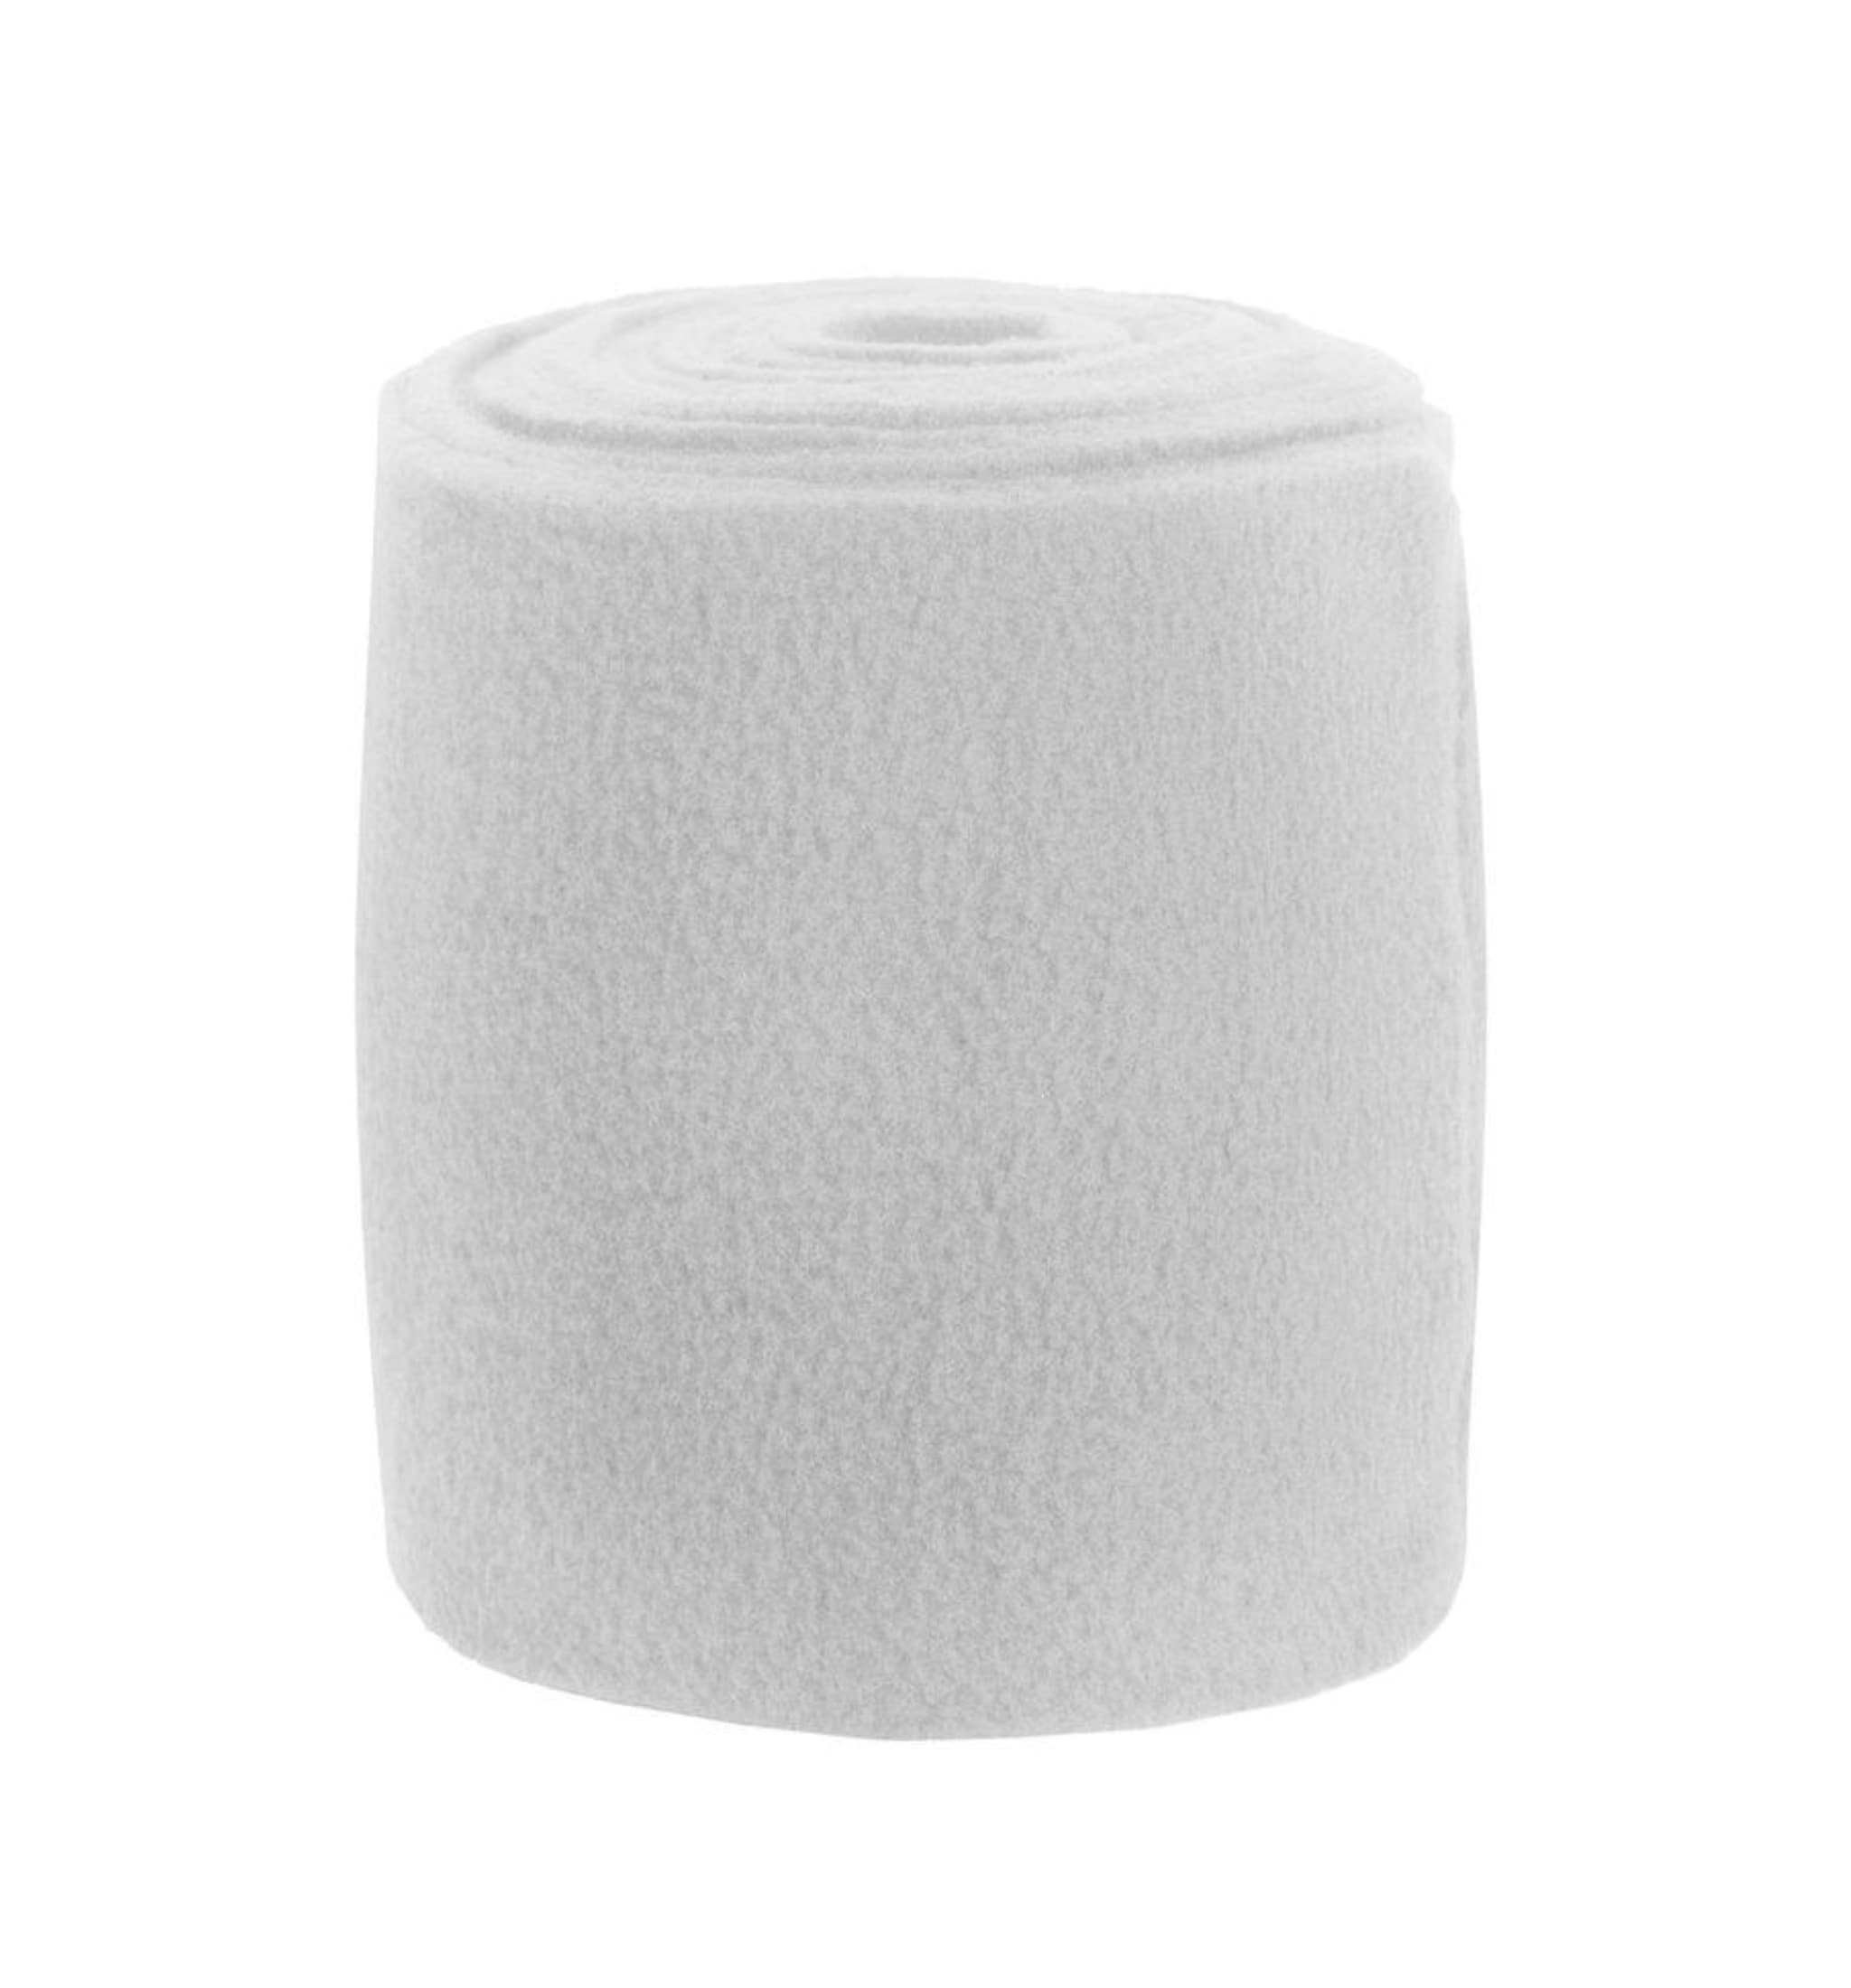 Polo Bandages Comfort - White